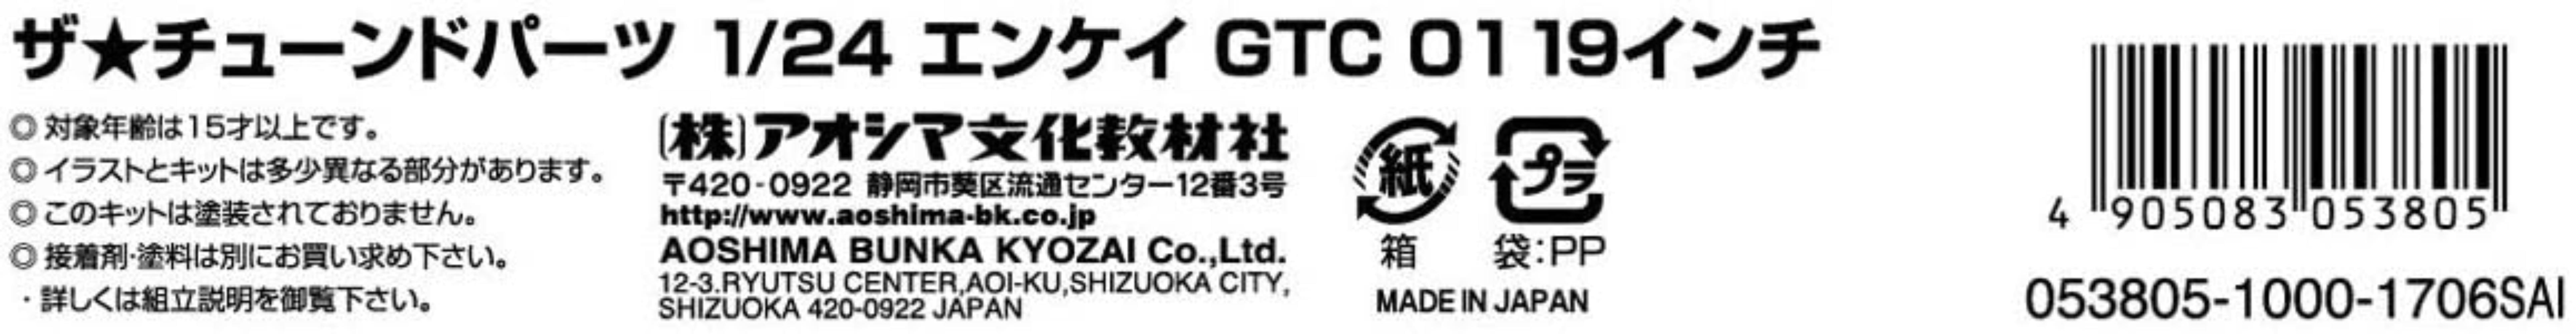 Aoshima 1/24 Enkei Gtc 01 19Inch NEW model kit